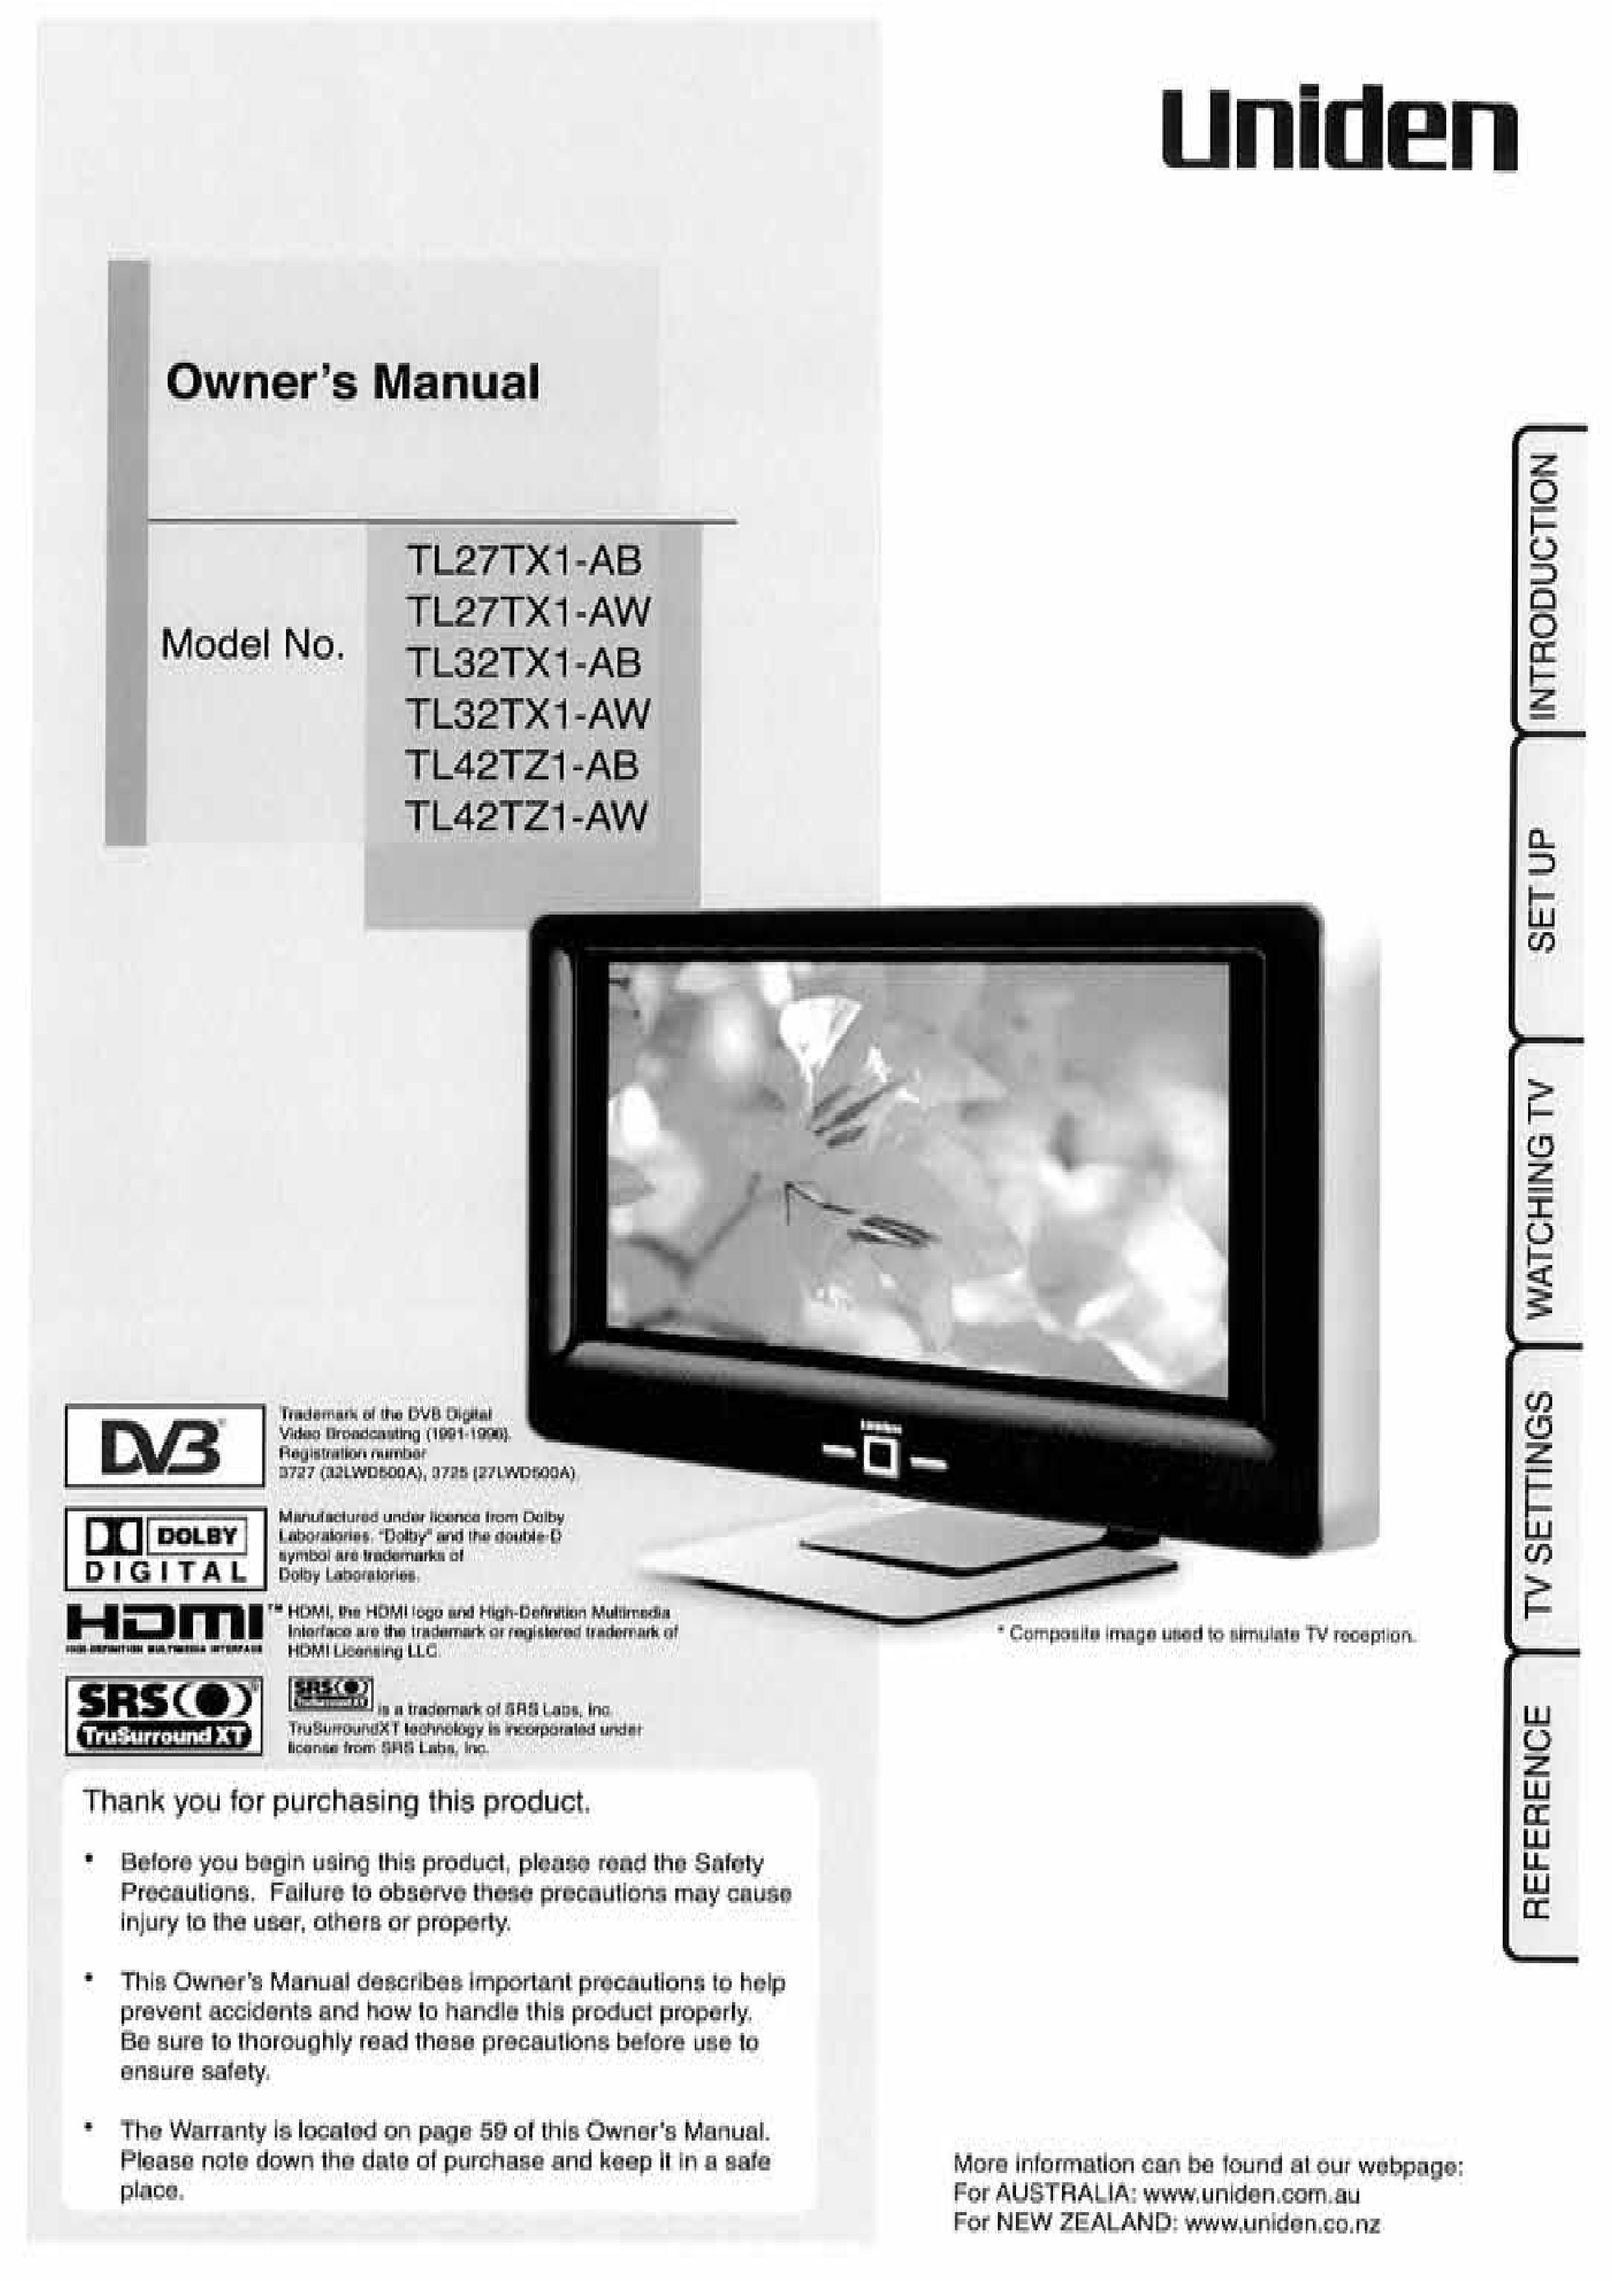 Uniden TL42TZ1-AB Flat Panel Television User Manual